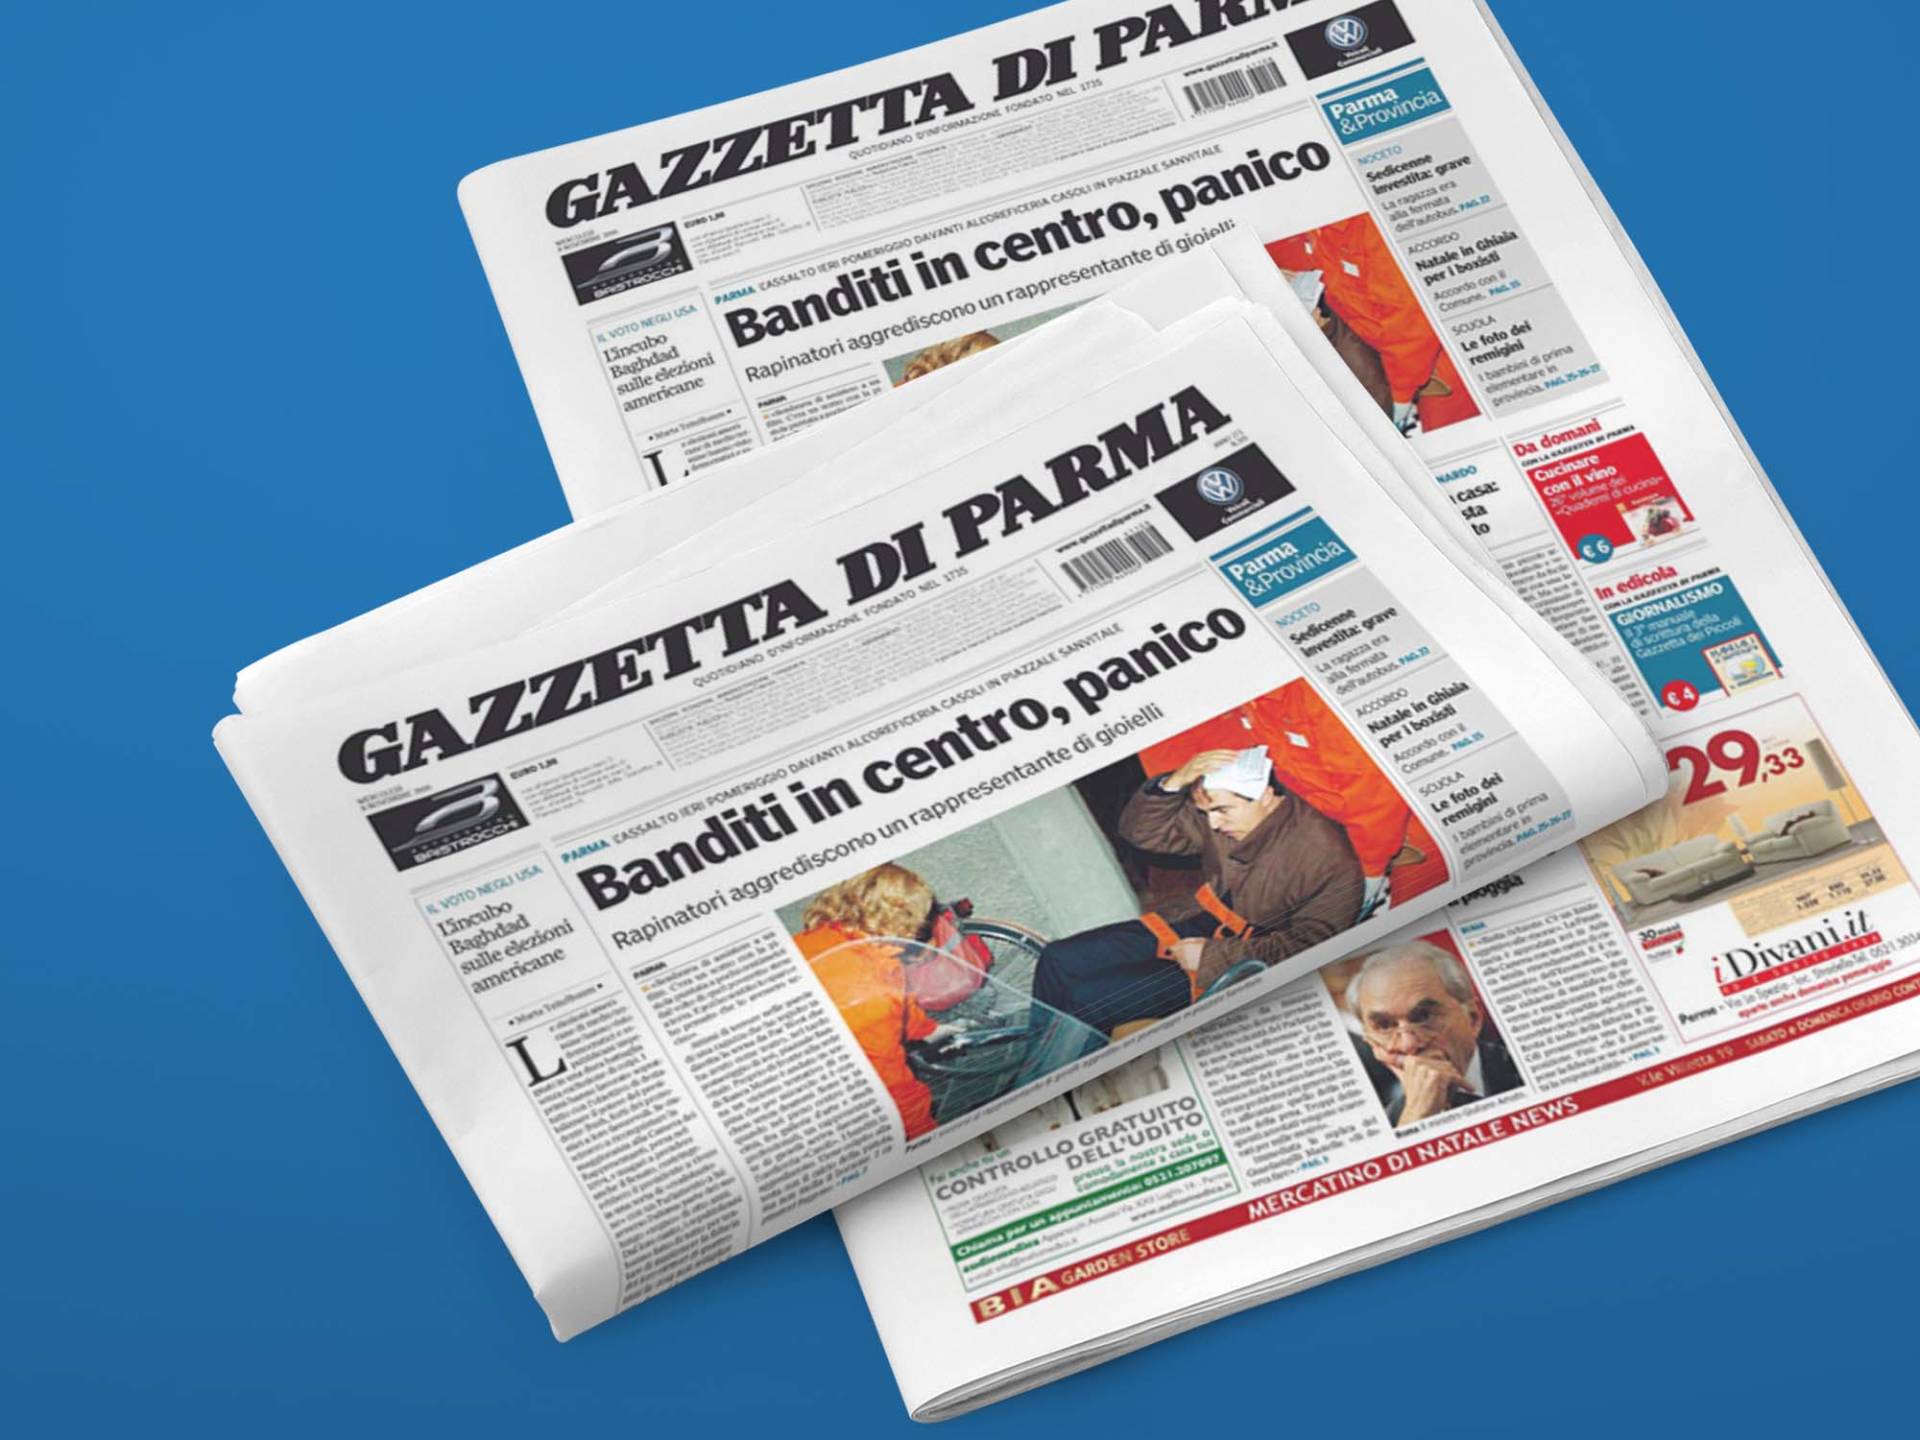 Gazzetta_di_Parma_01_Wenceslau_News_Design